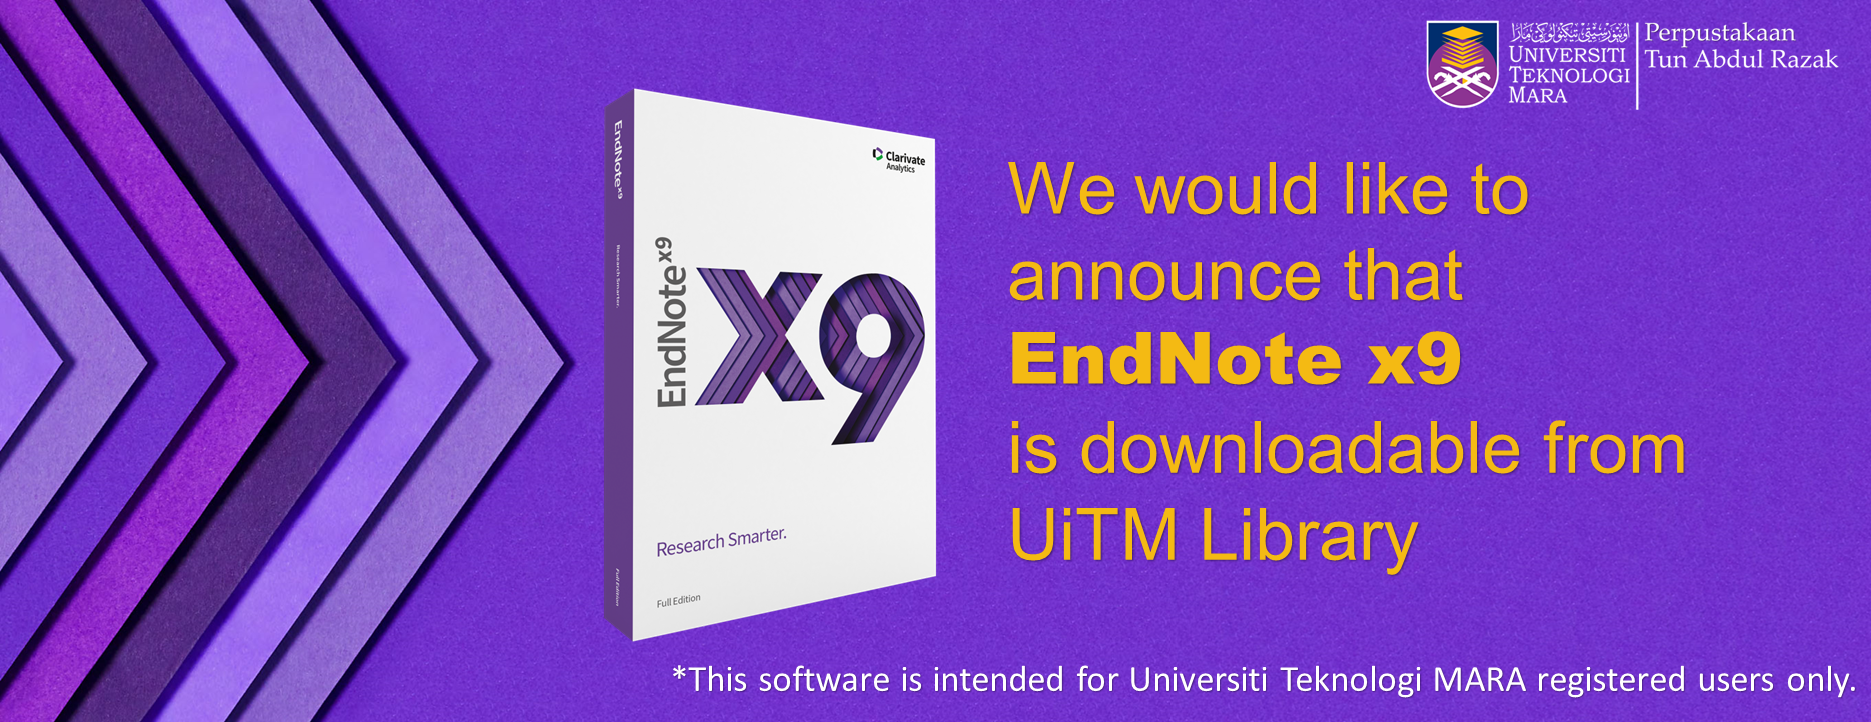 endnote9